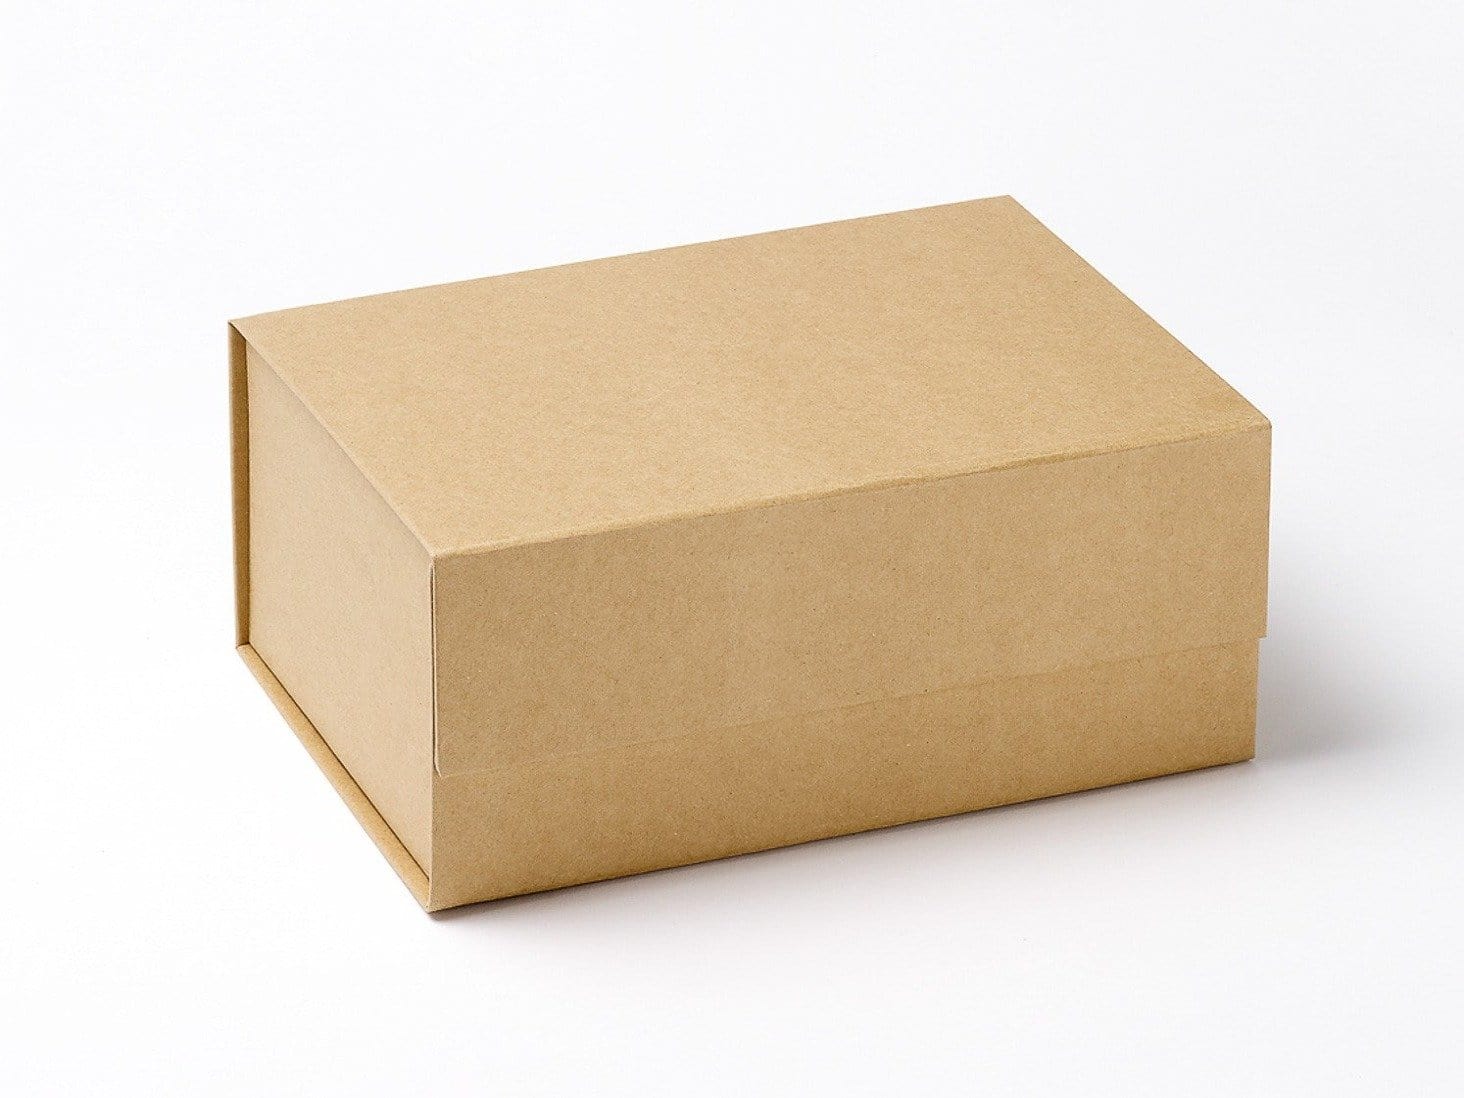 Foldabox UK A5 Deep Natural Kraft Folding Gift Box with Magnetic Snap Shut Closure